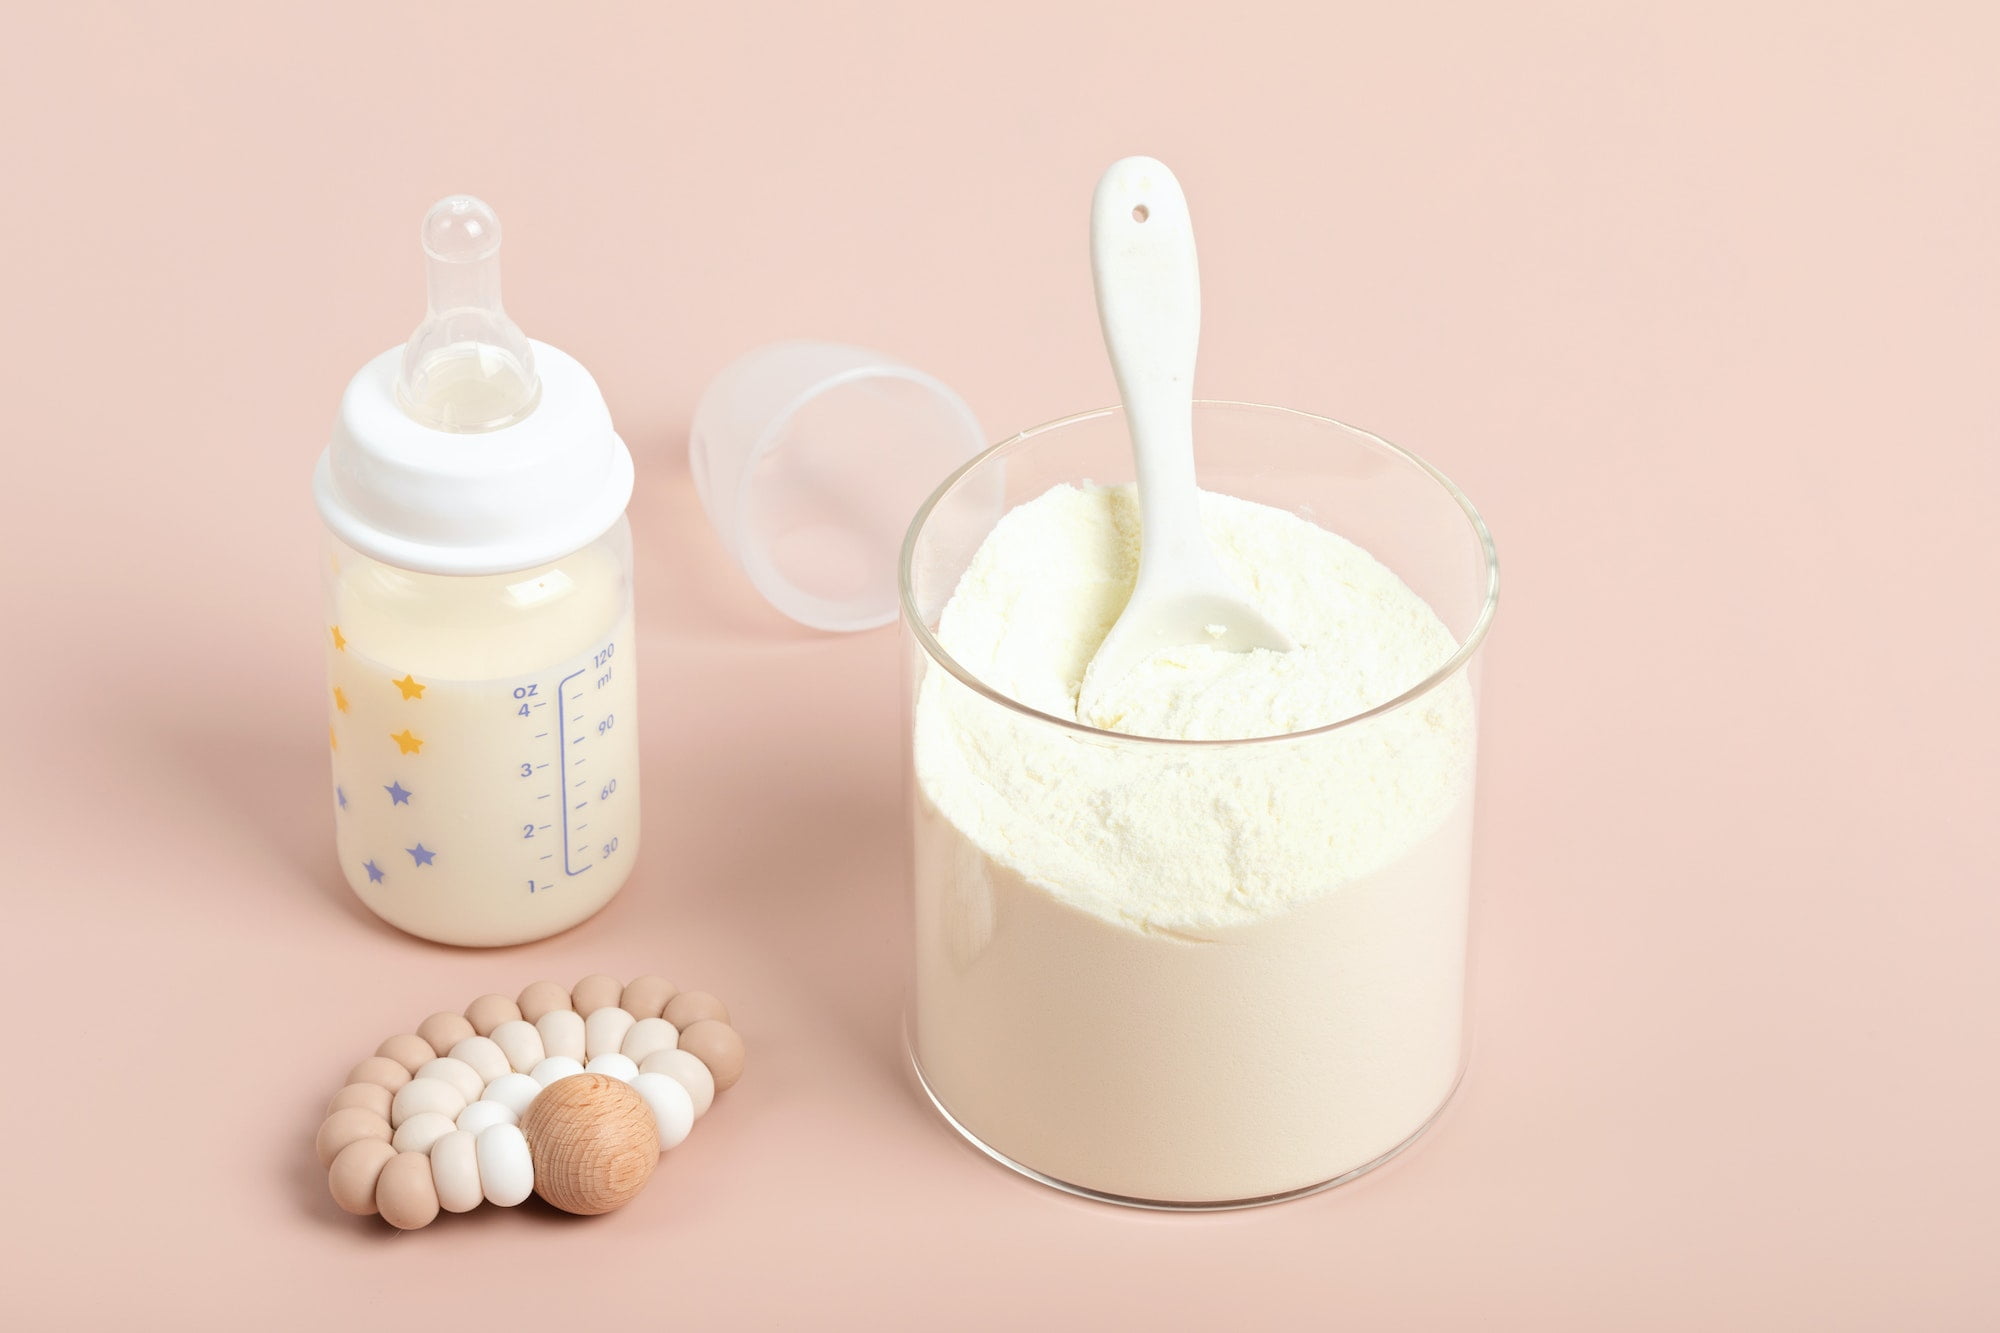 4 oz breast milk equals how much formula